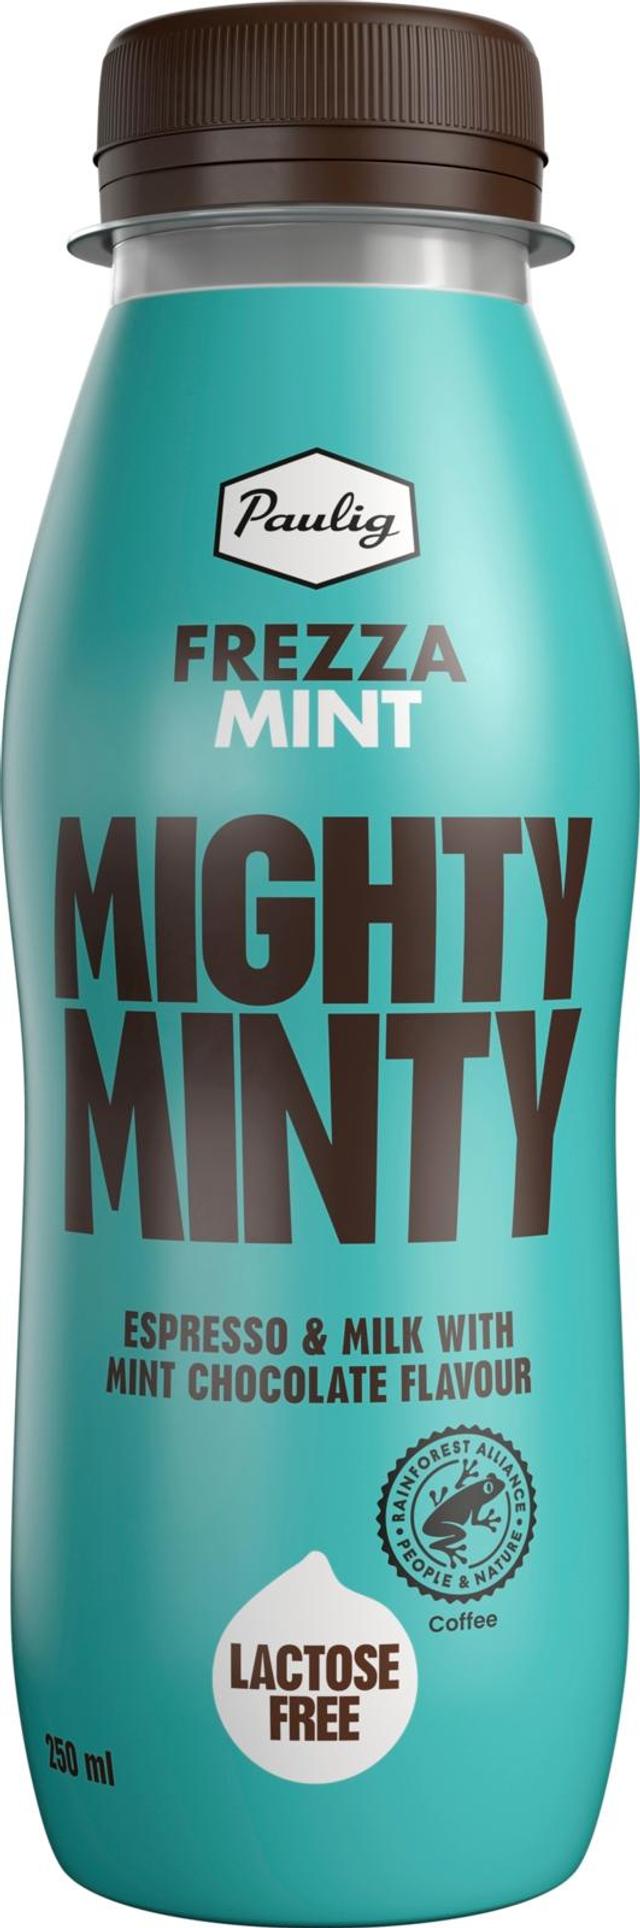 Paulig Frezza Mint Mighty Minty 250ml laktoositon maitokahvijuoma minttusuklainen maku